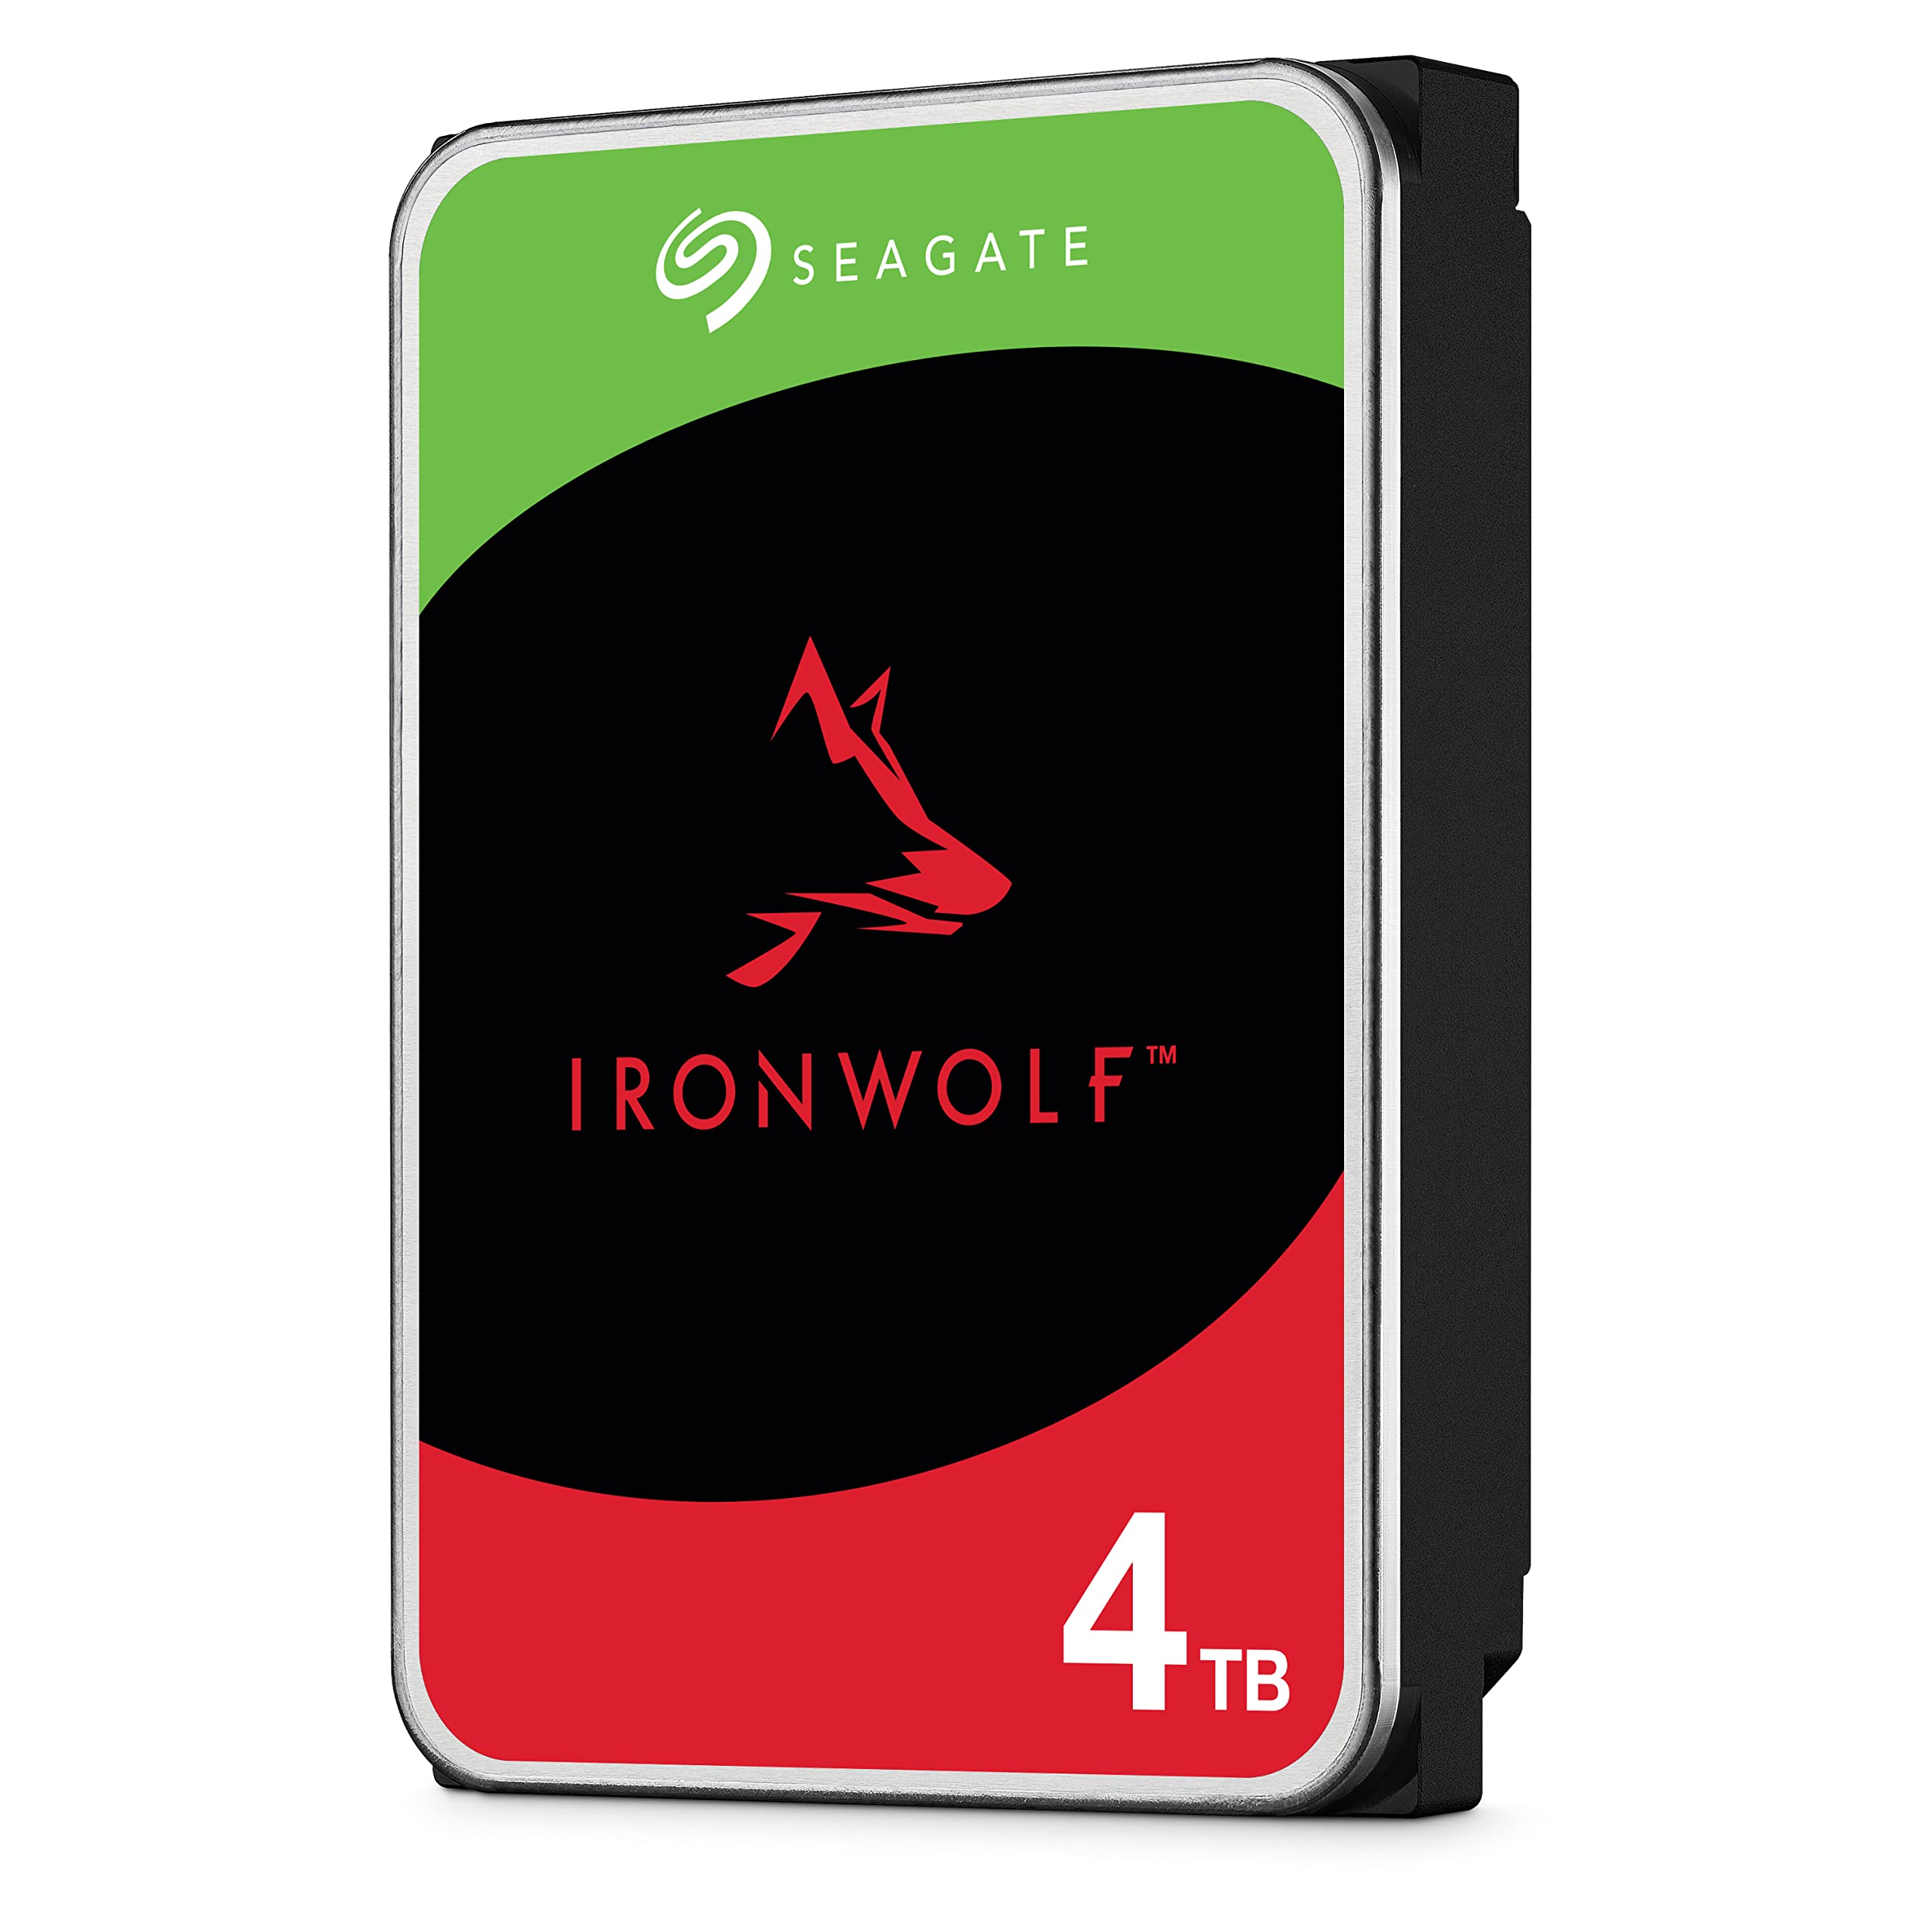 Seagate IronWolf 4 TB interne Festplatte, NAS HDD, 3.5 Zoll, 5900 U/Min, CMR, 64 MB Cache, SATA 6 GB/s, silber, 3 Jahre Data Rescue Service, Modellnr.: ST4000VN008